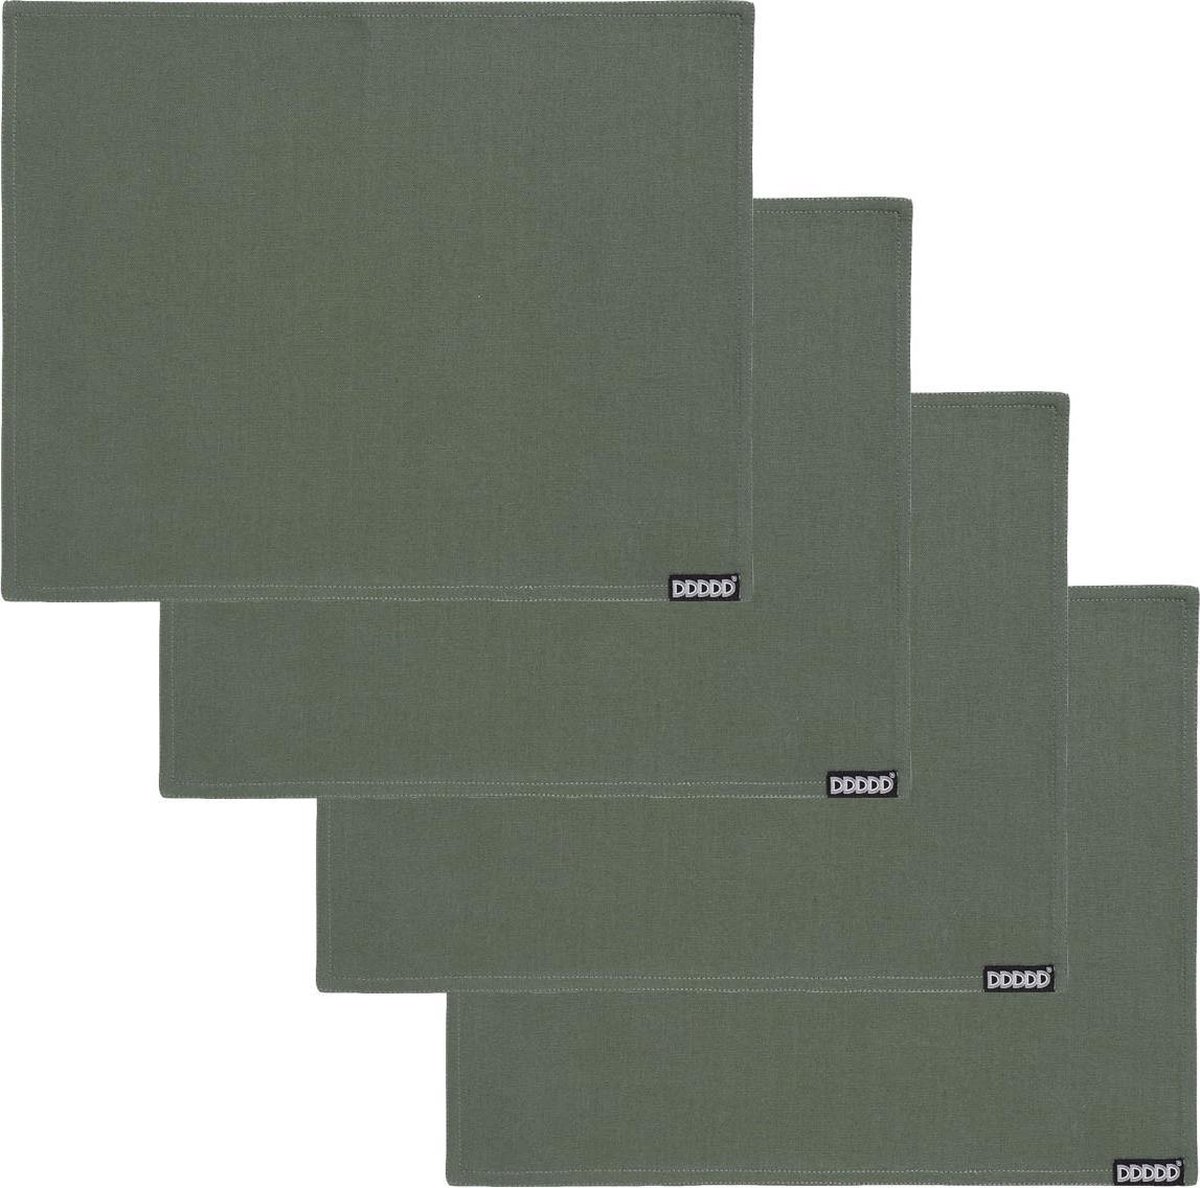 DDDDD Kit Placemat - Set van 4 - Luxe Tafeltextiel - 35x45 cm - Groen